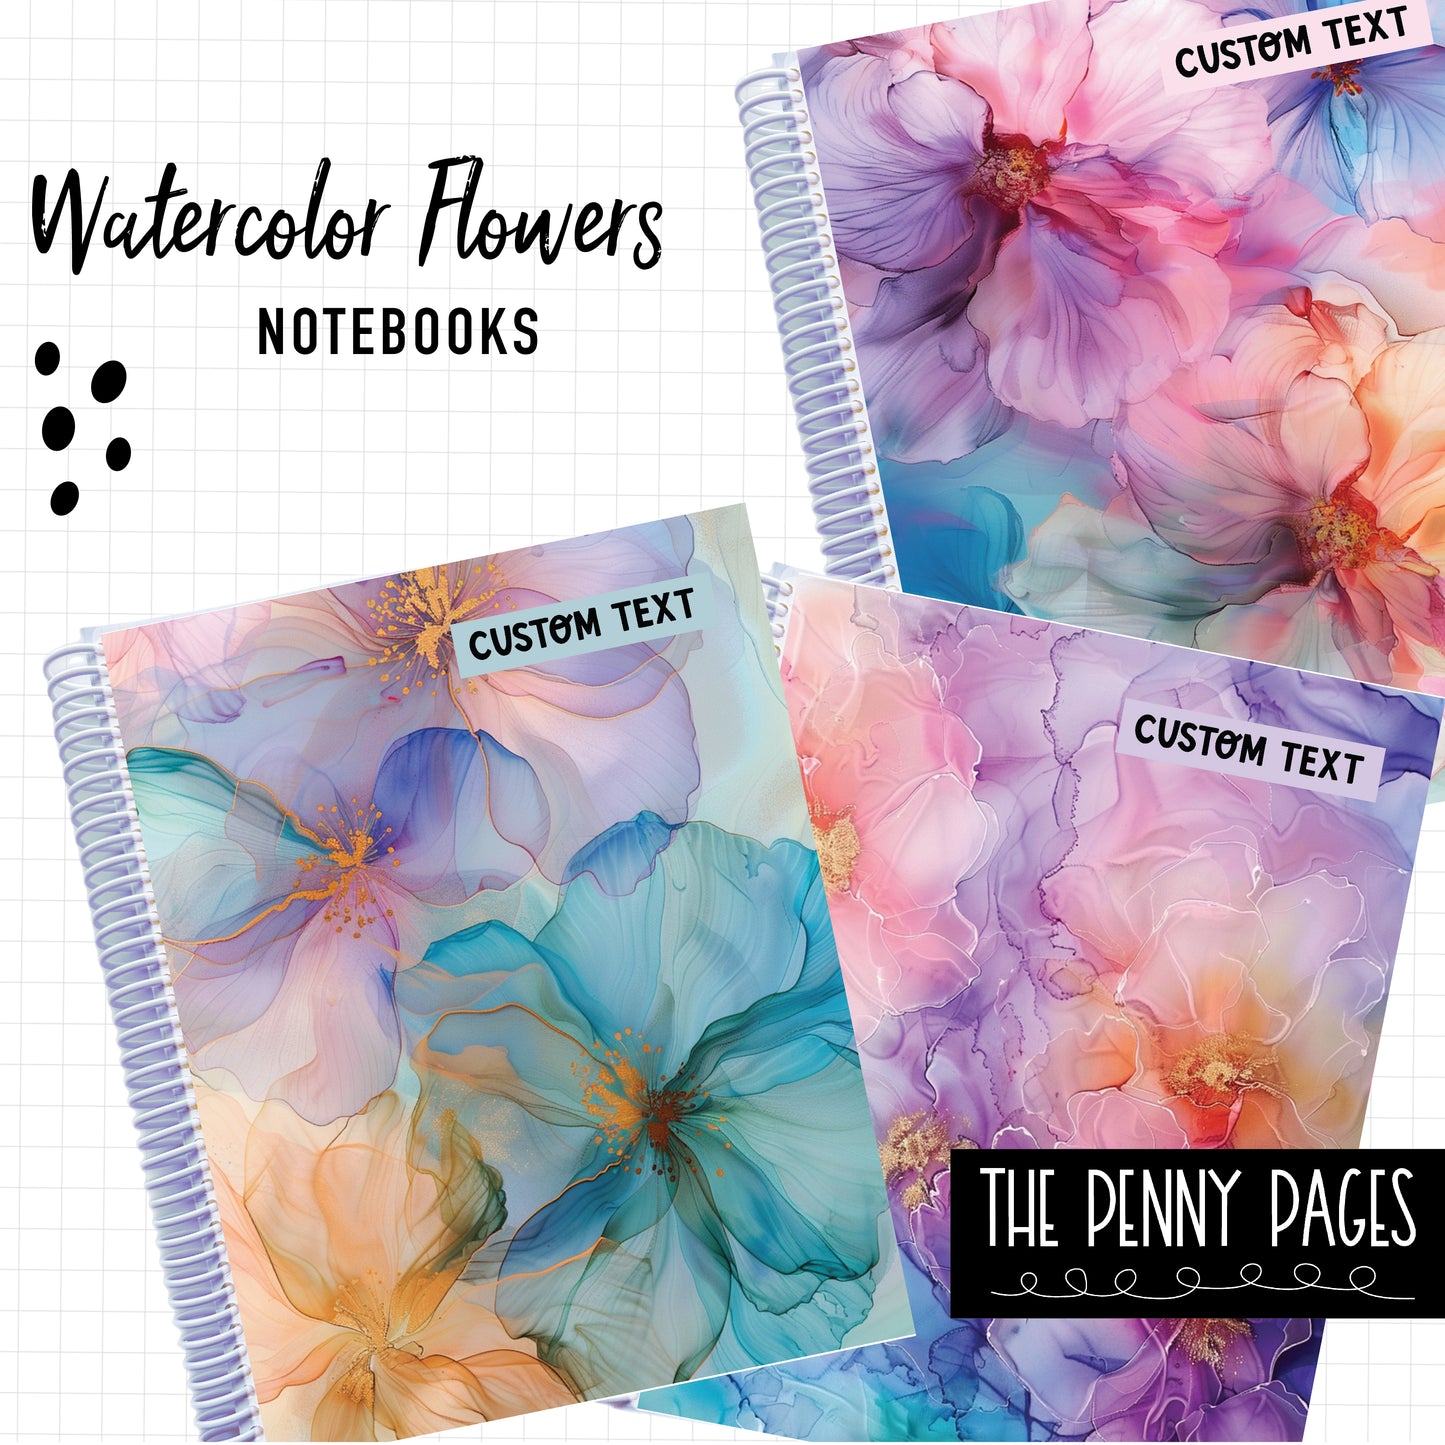 Watercolor Flowers - Notebooks